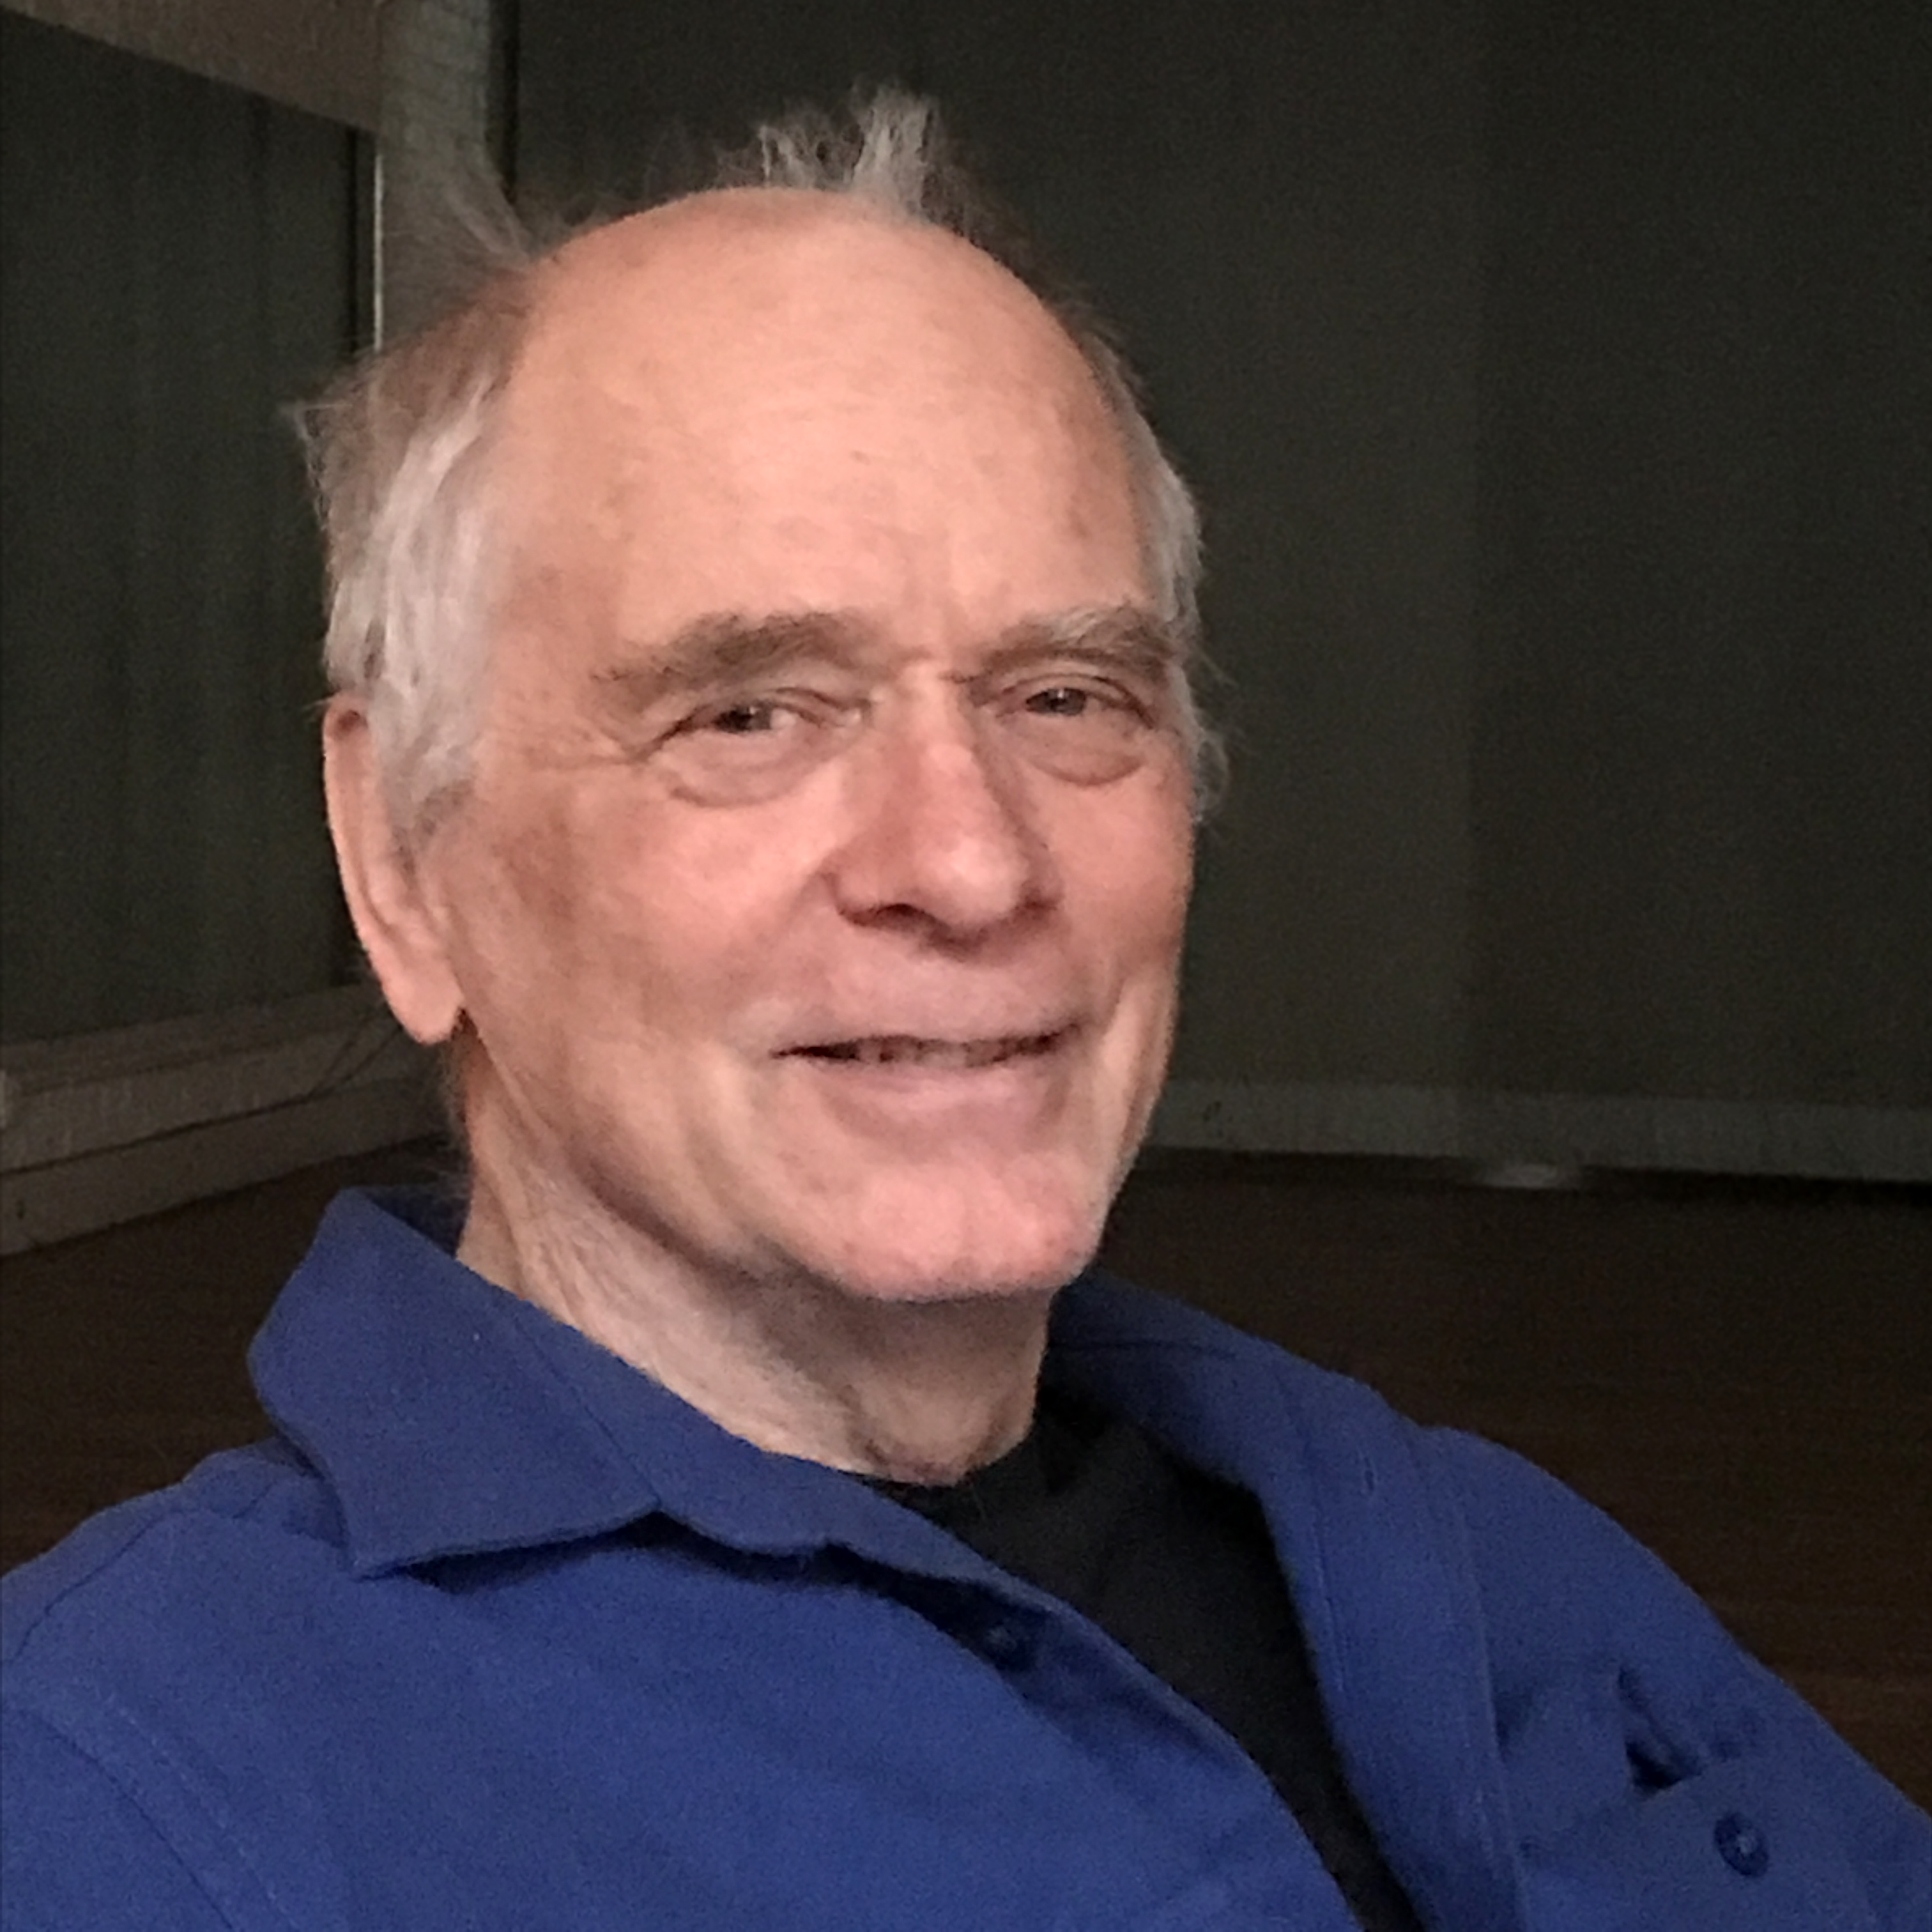 Dancer, Choreographer and Long-Time Resident: Meet Douglas Dunn